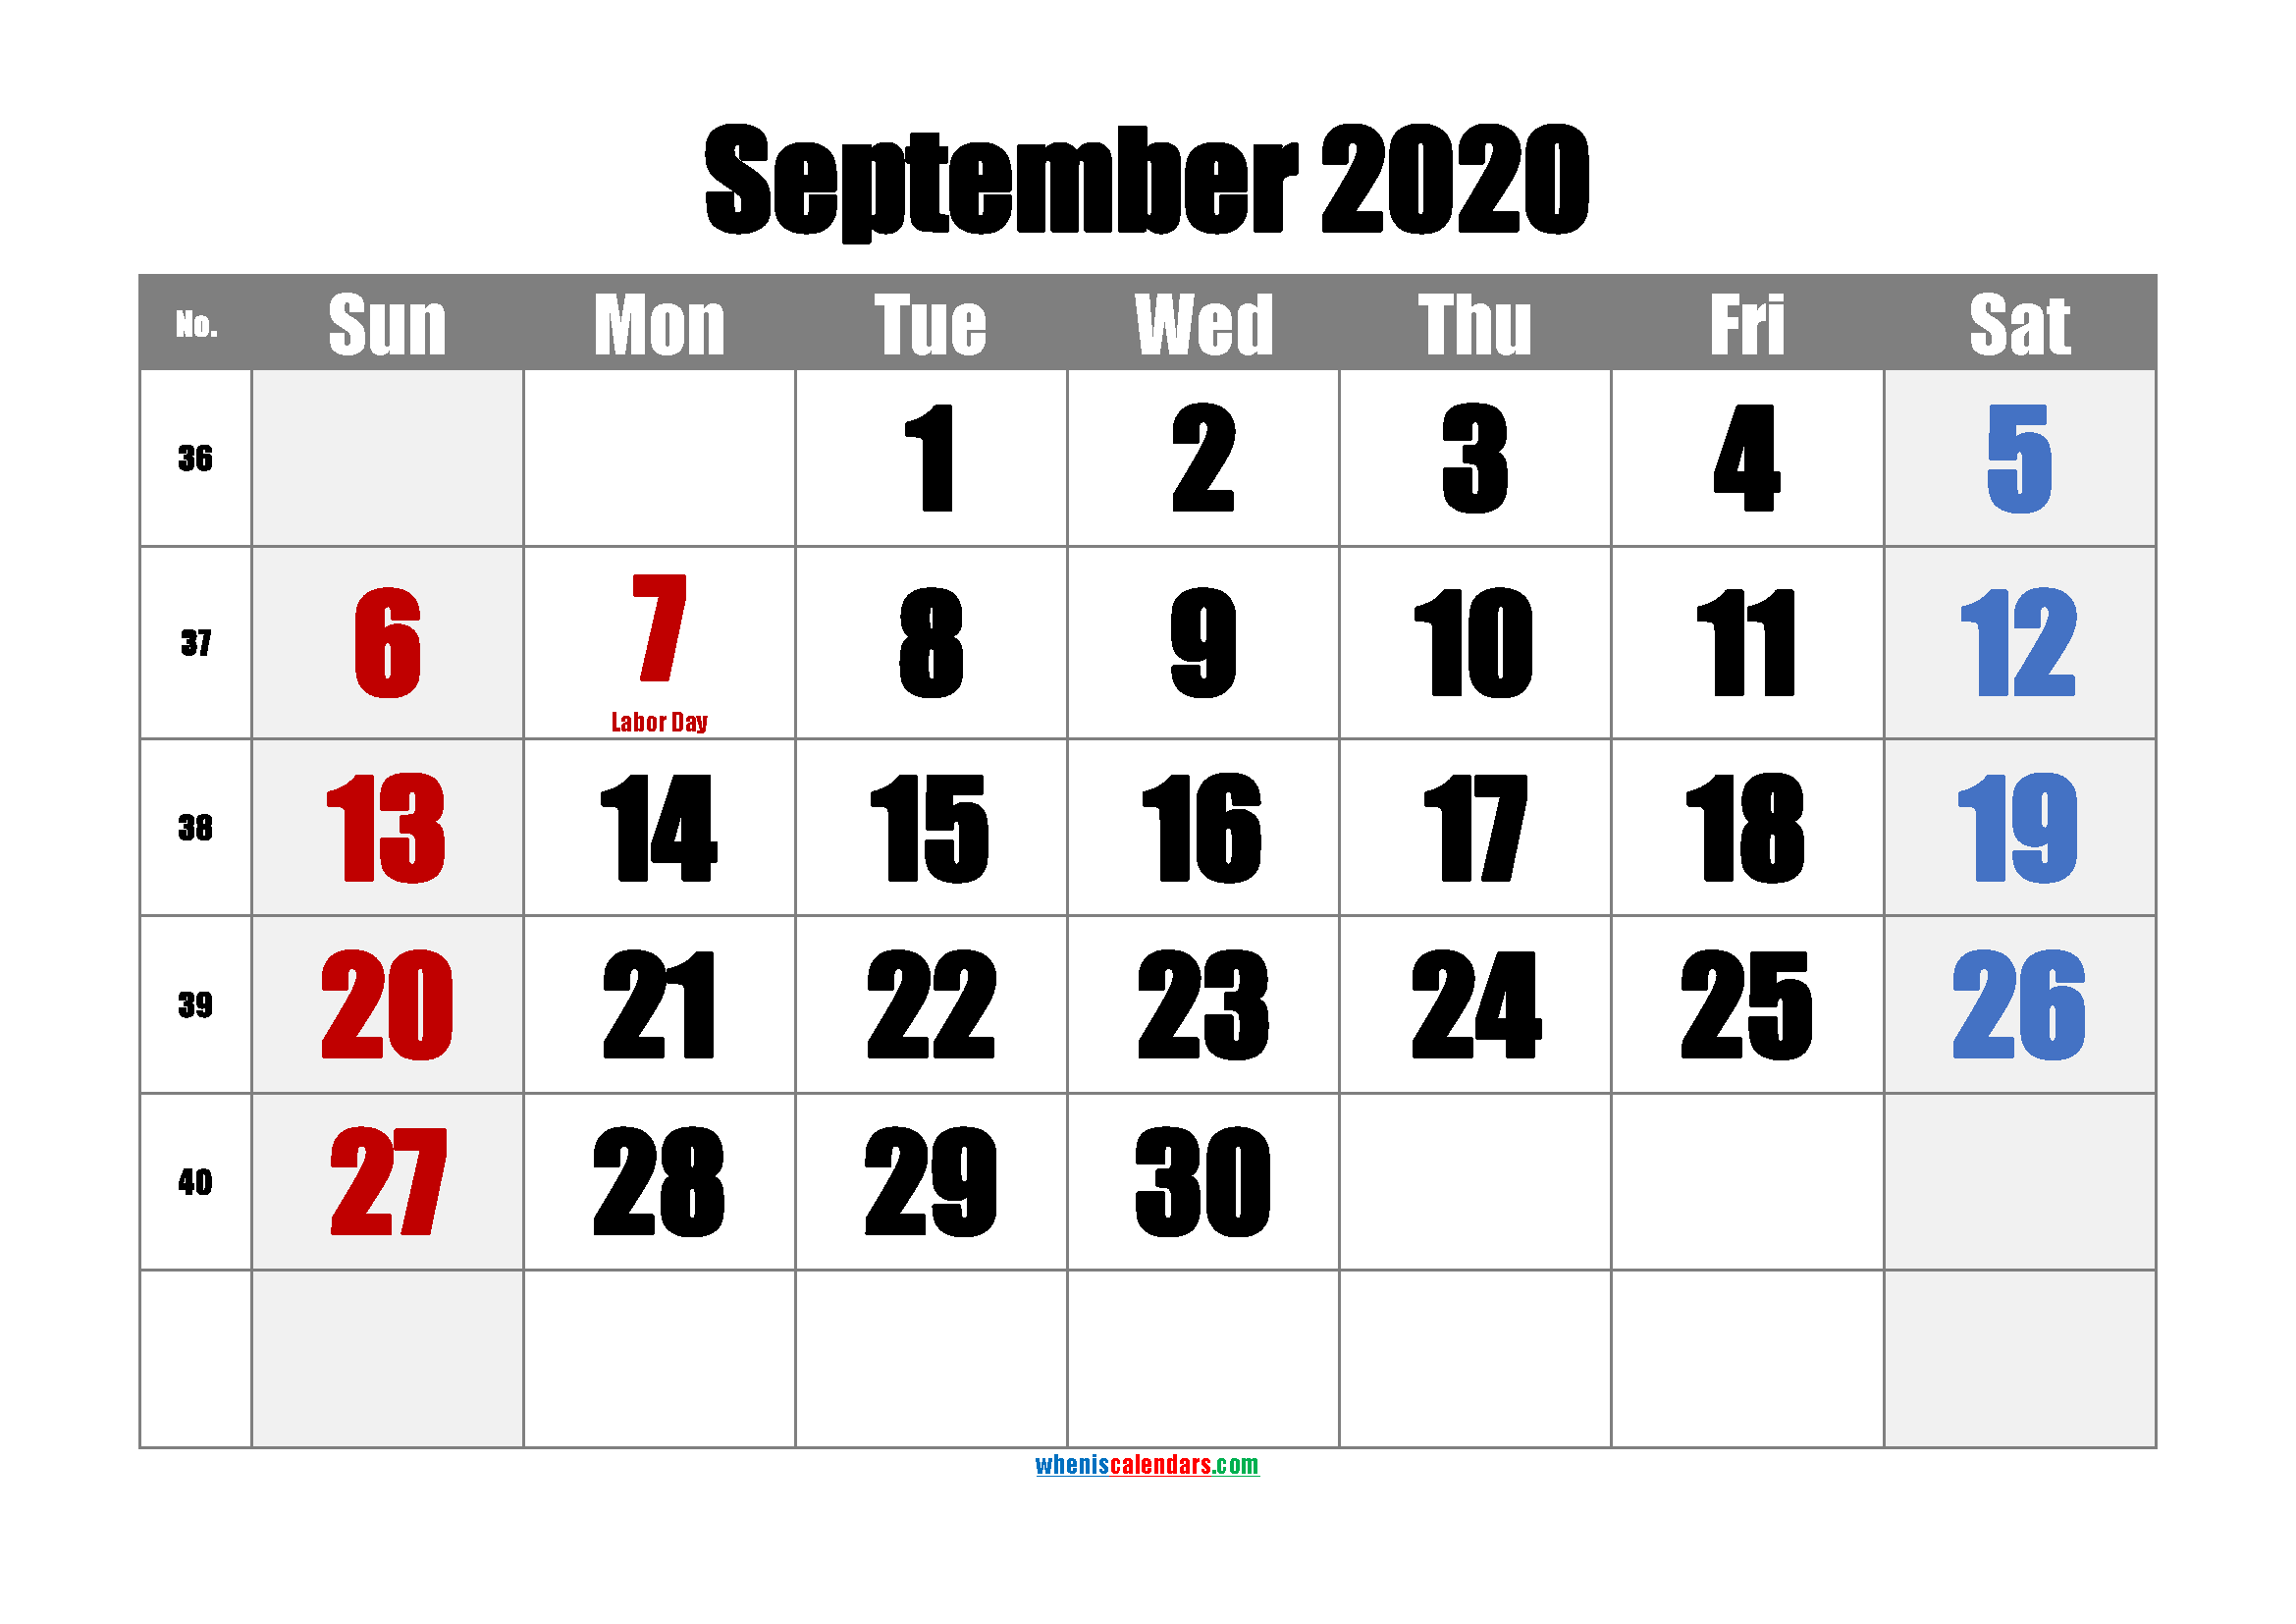 September 2020 Printable Calendar with Holidays